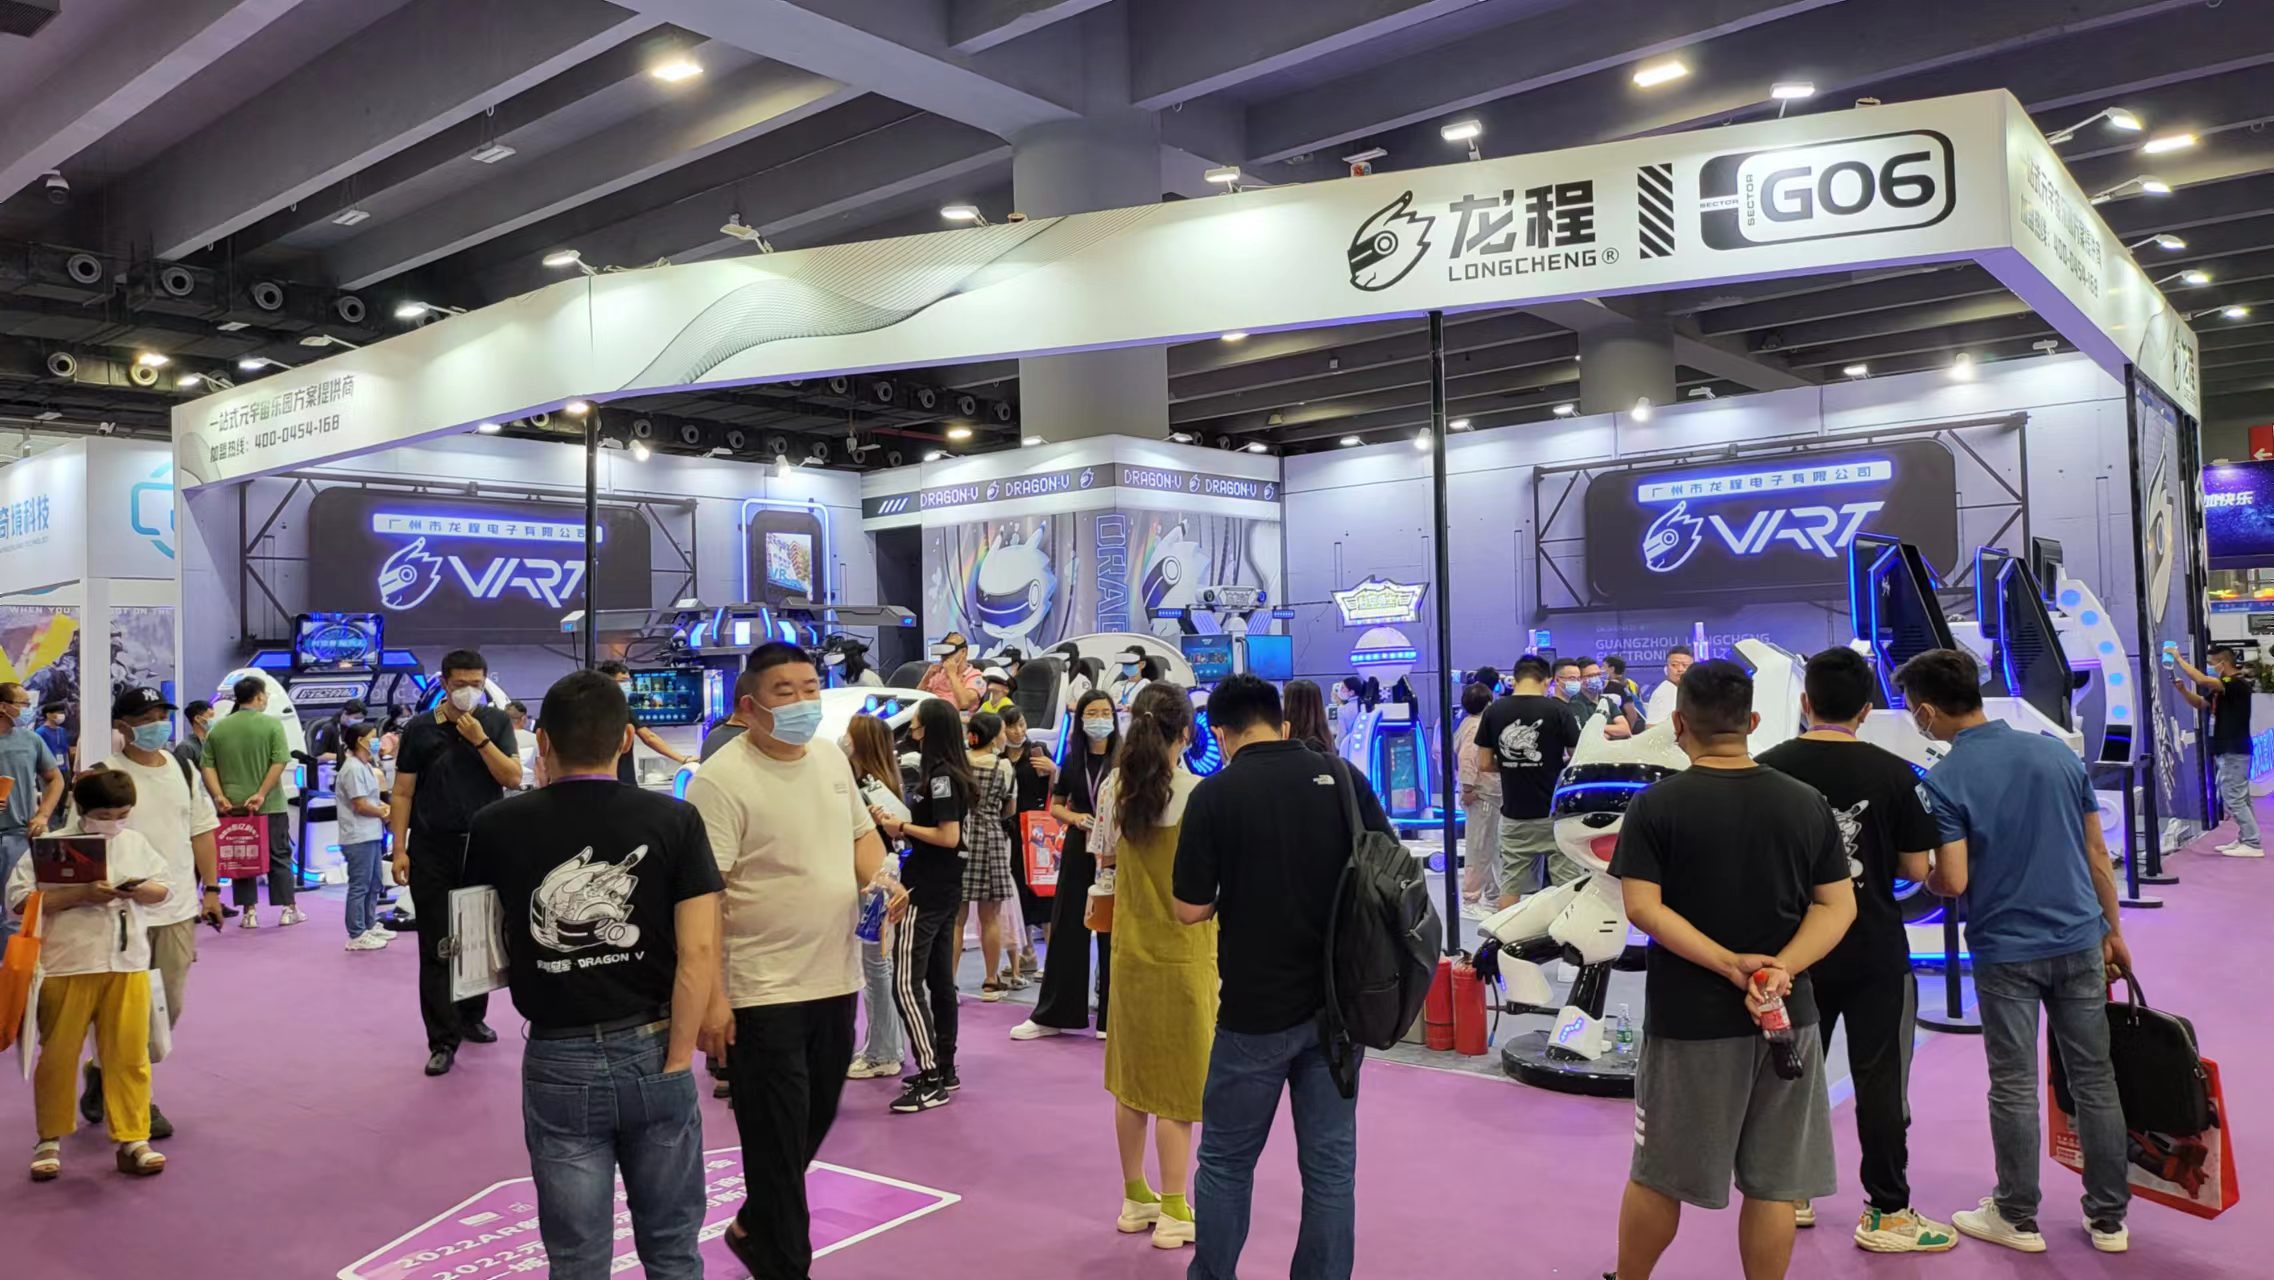 VART VR |Guangzhou Metaverse Sergi Standı G06 Gerçekten Popüler